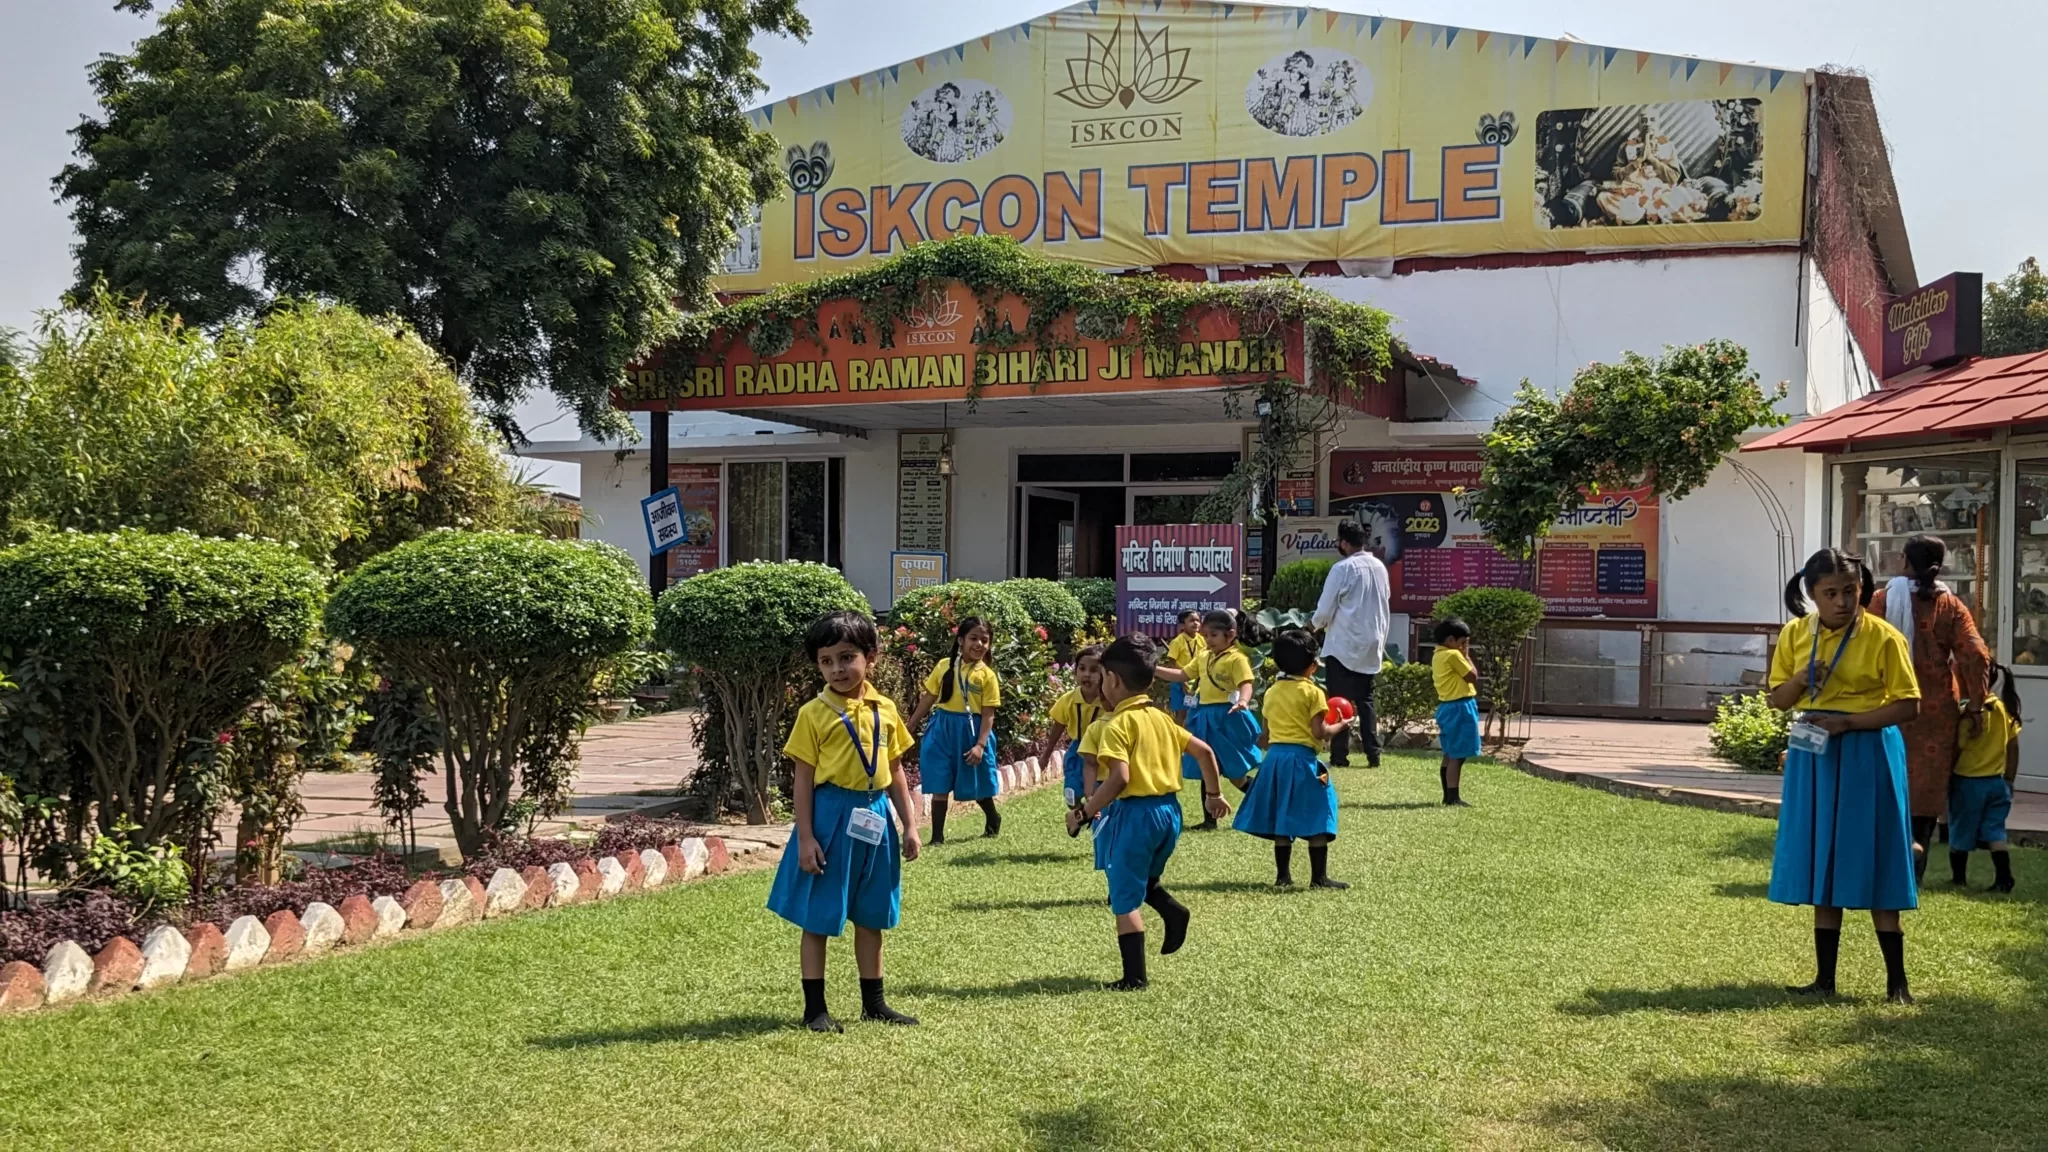 Our children are having fun at ISKON's Temple Garden.